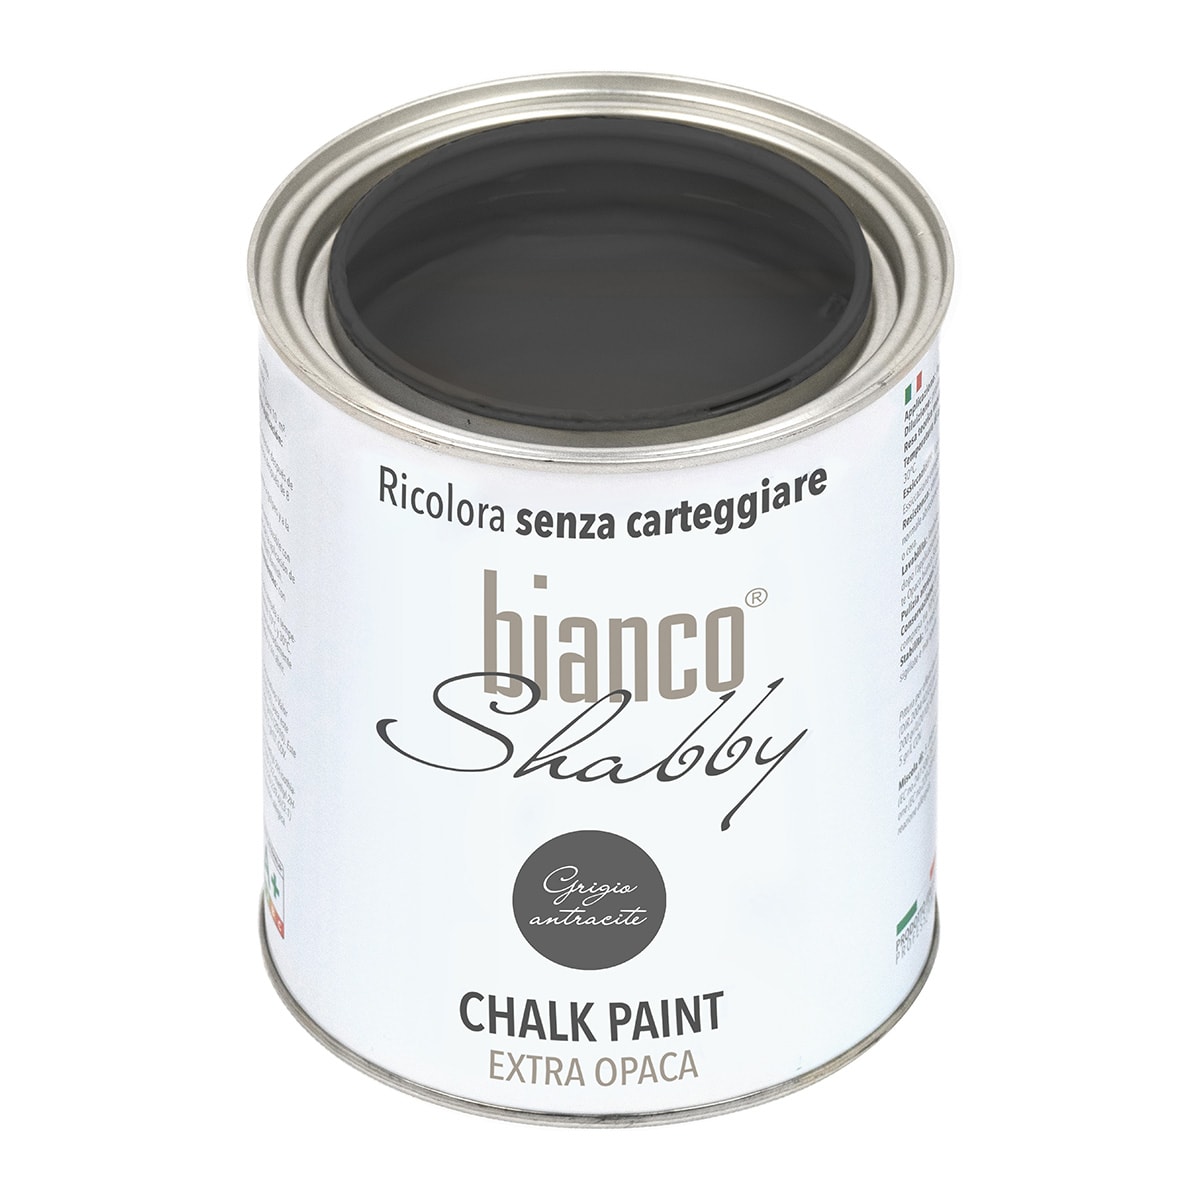 Chalk Paint Ecologica Grigio Antracite 100% Italiana - biancoshabby®